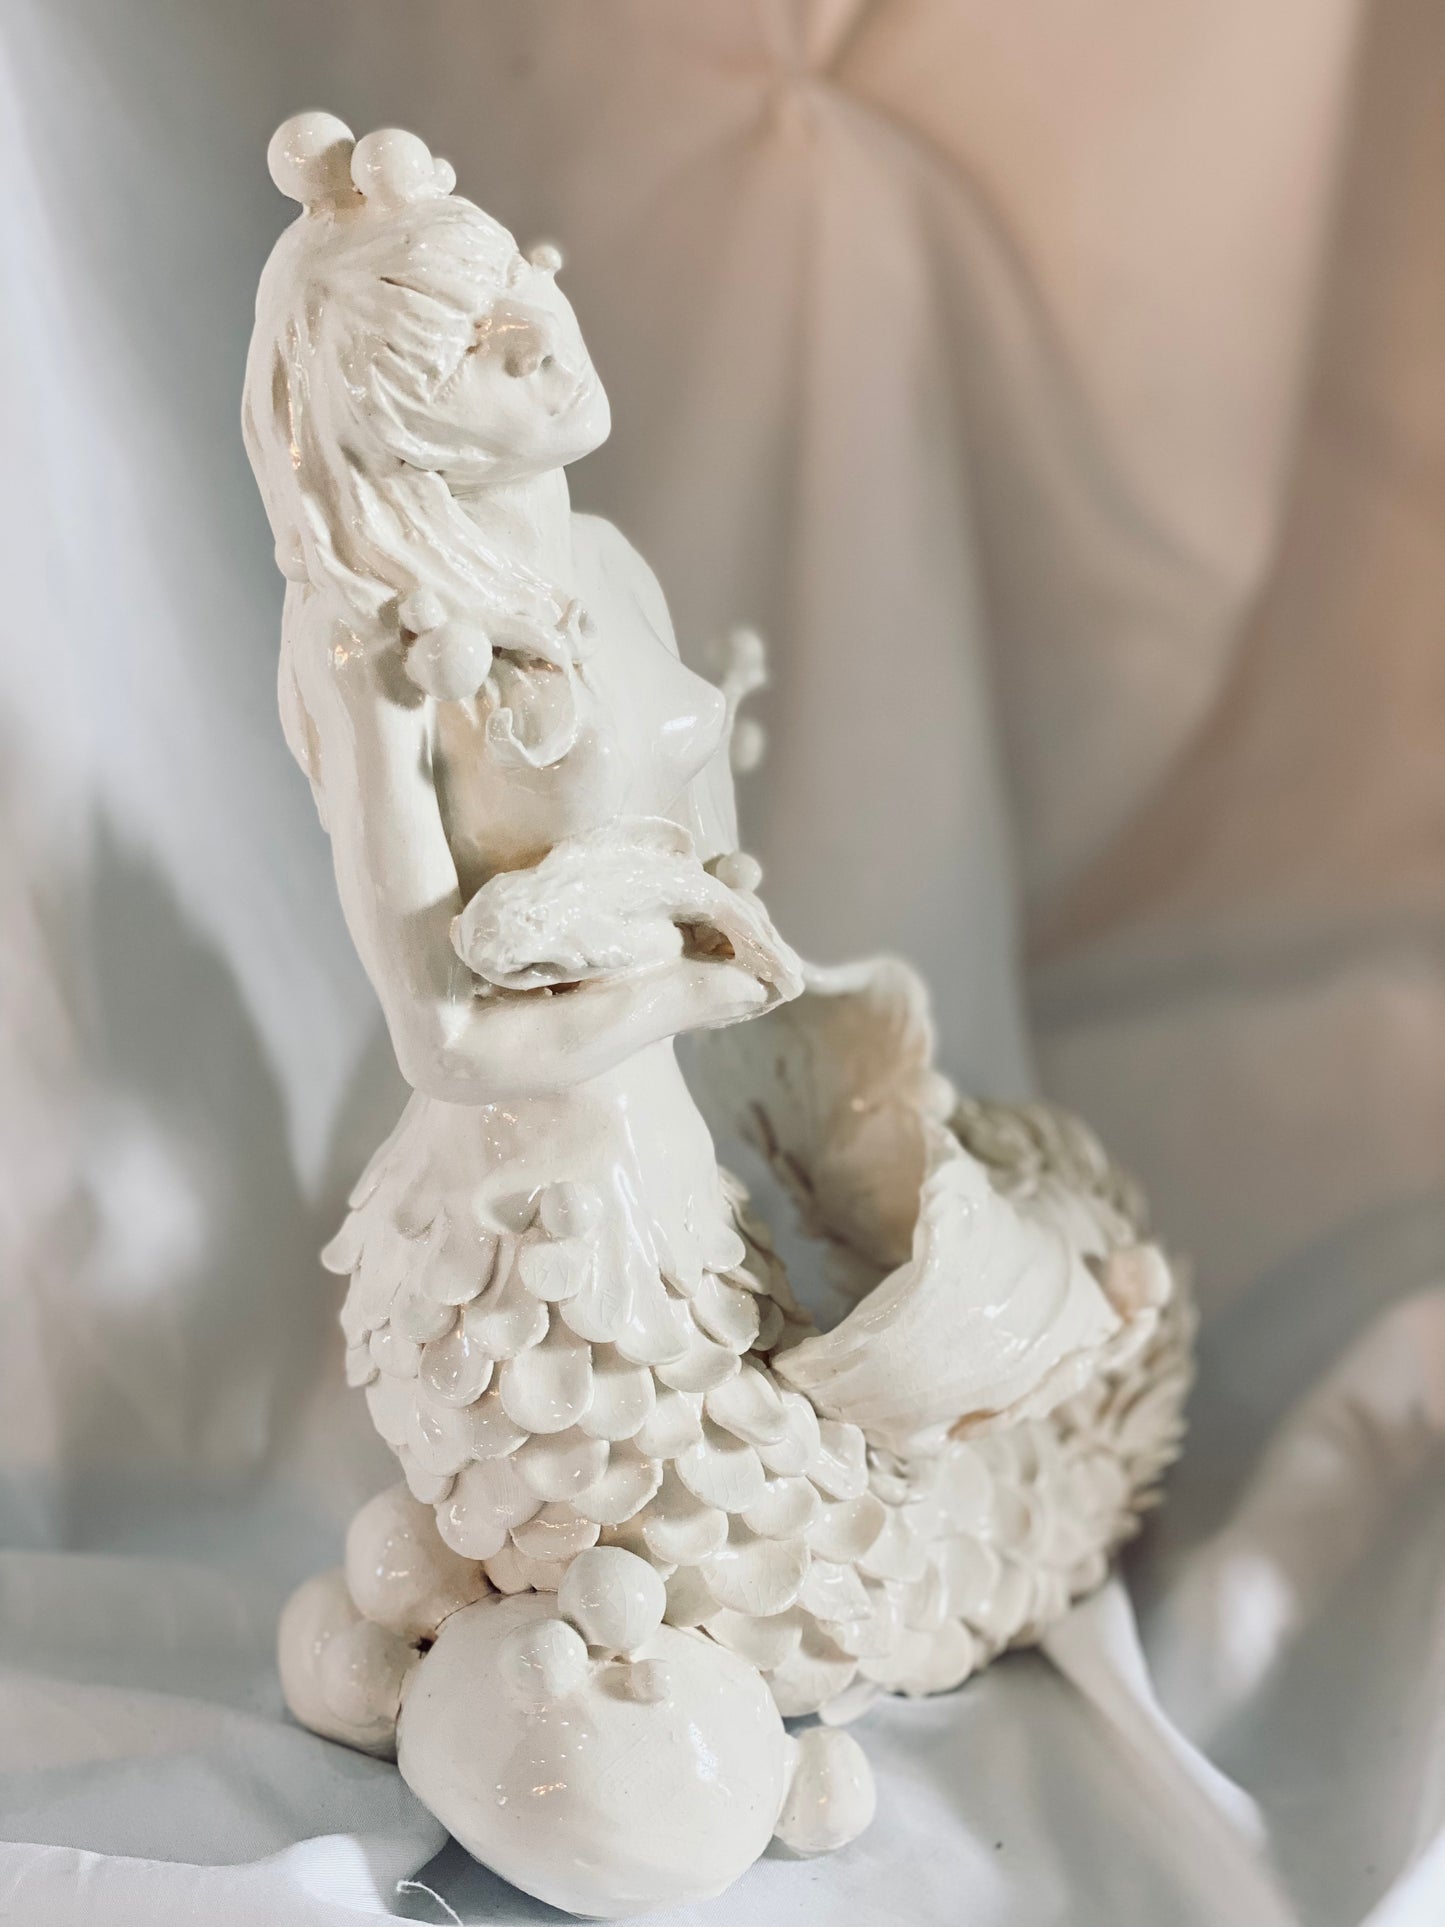 Mermaid - White Siren, by Linda Titow